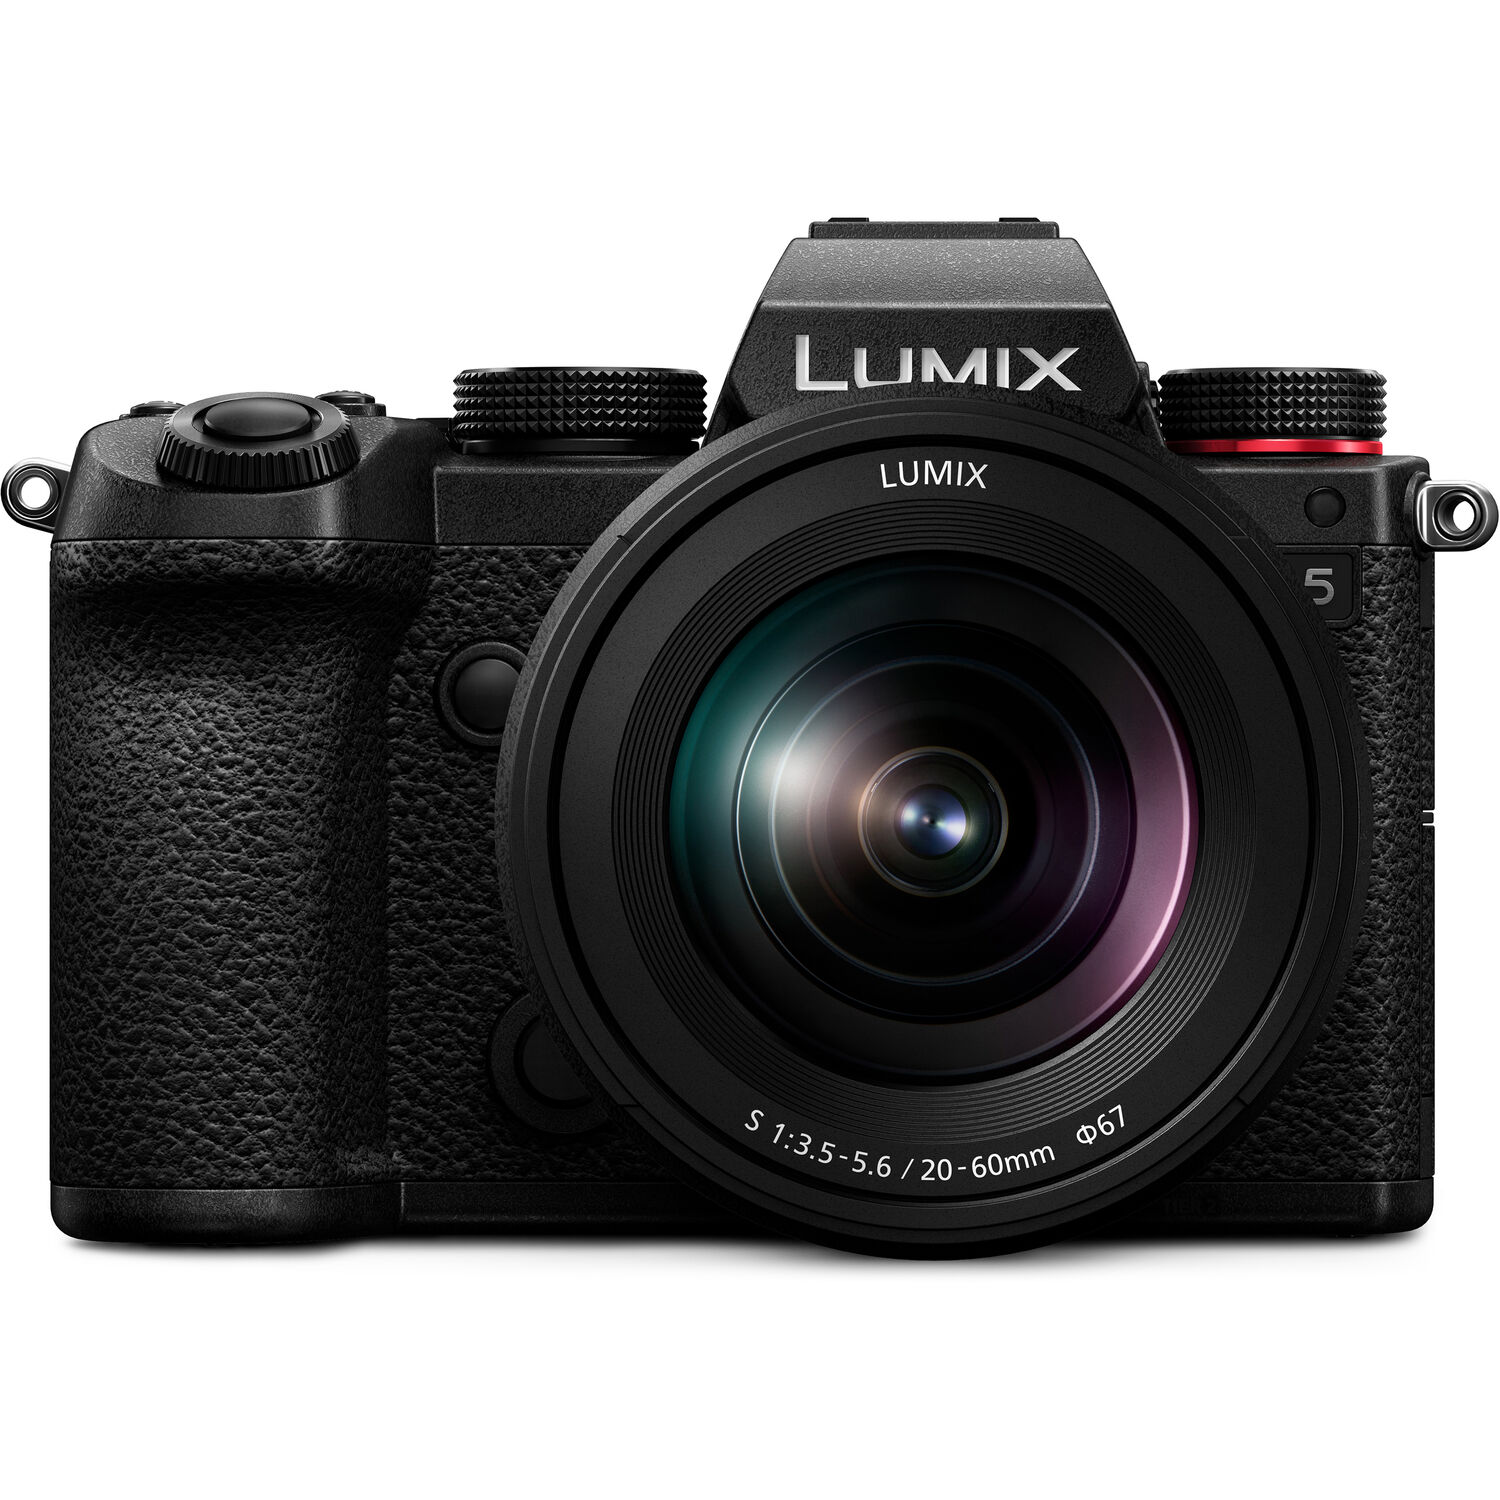 Panasonic LUMIX S5 Camera with 20-60mm F3.5-5.6 Lens